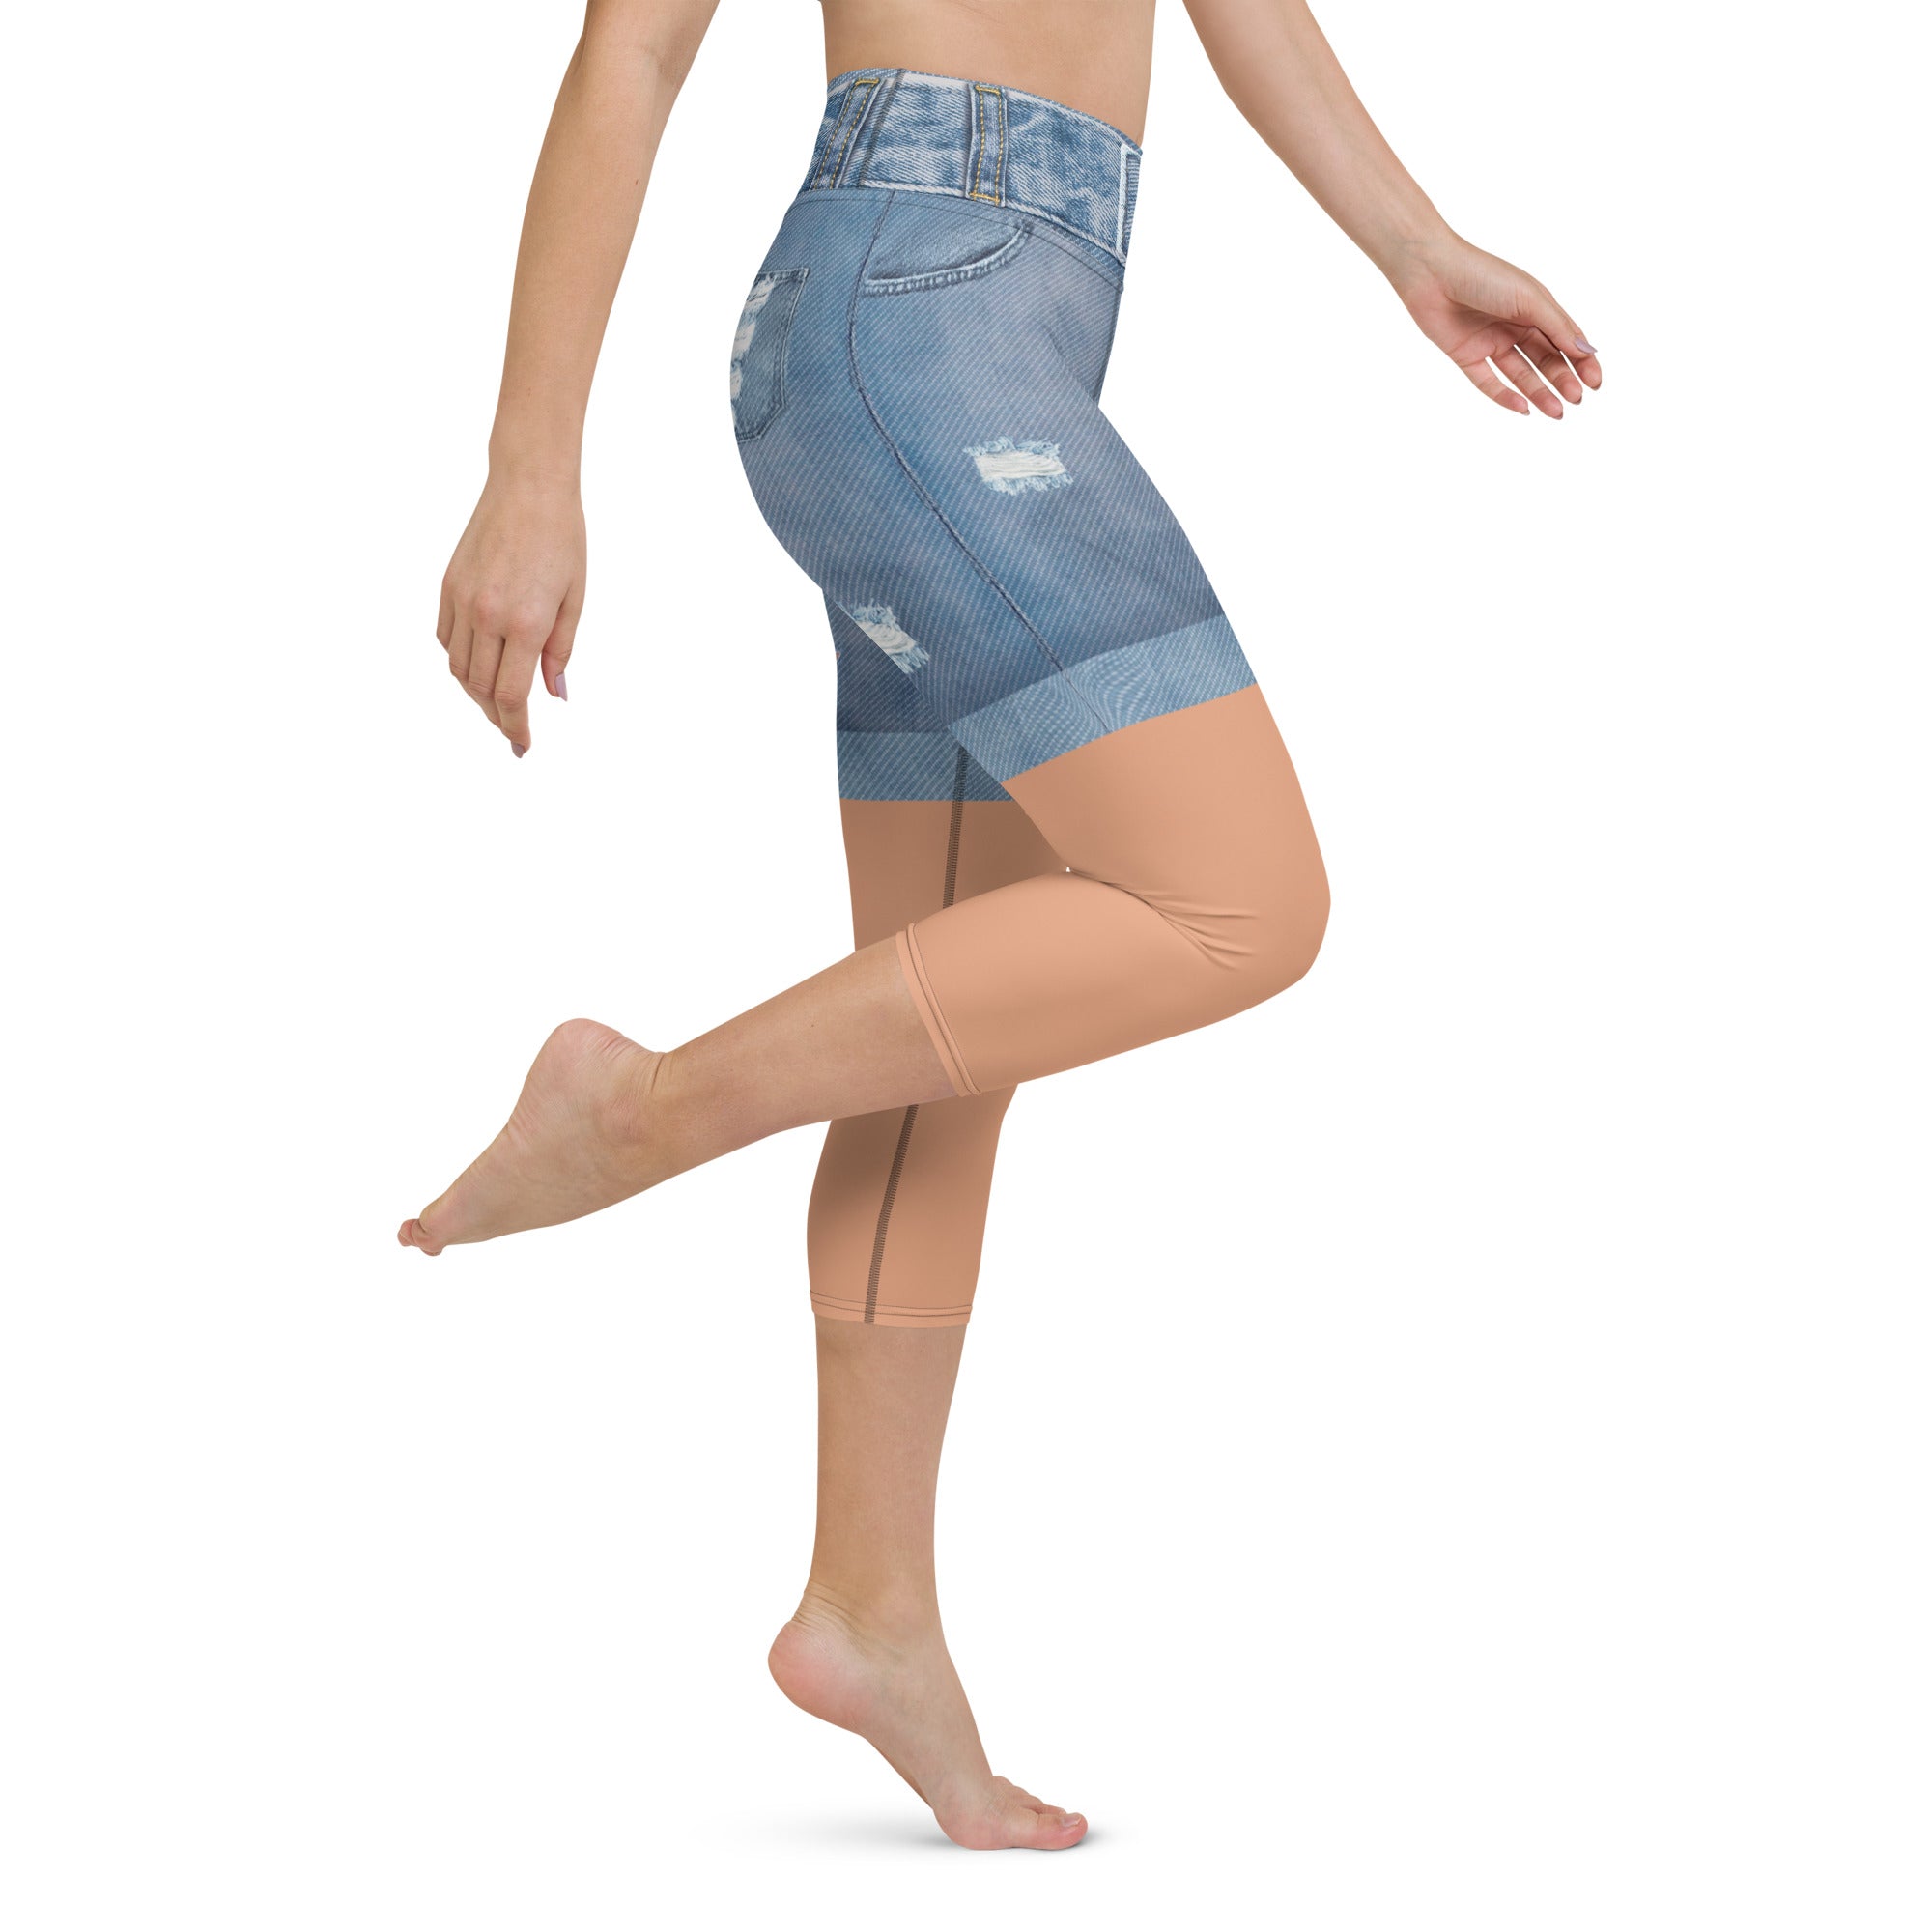 Tan Tone Denim Shorts Yoga Capris